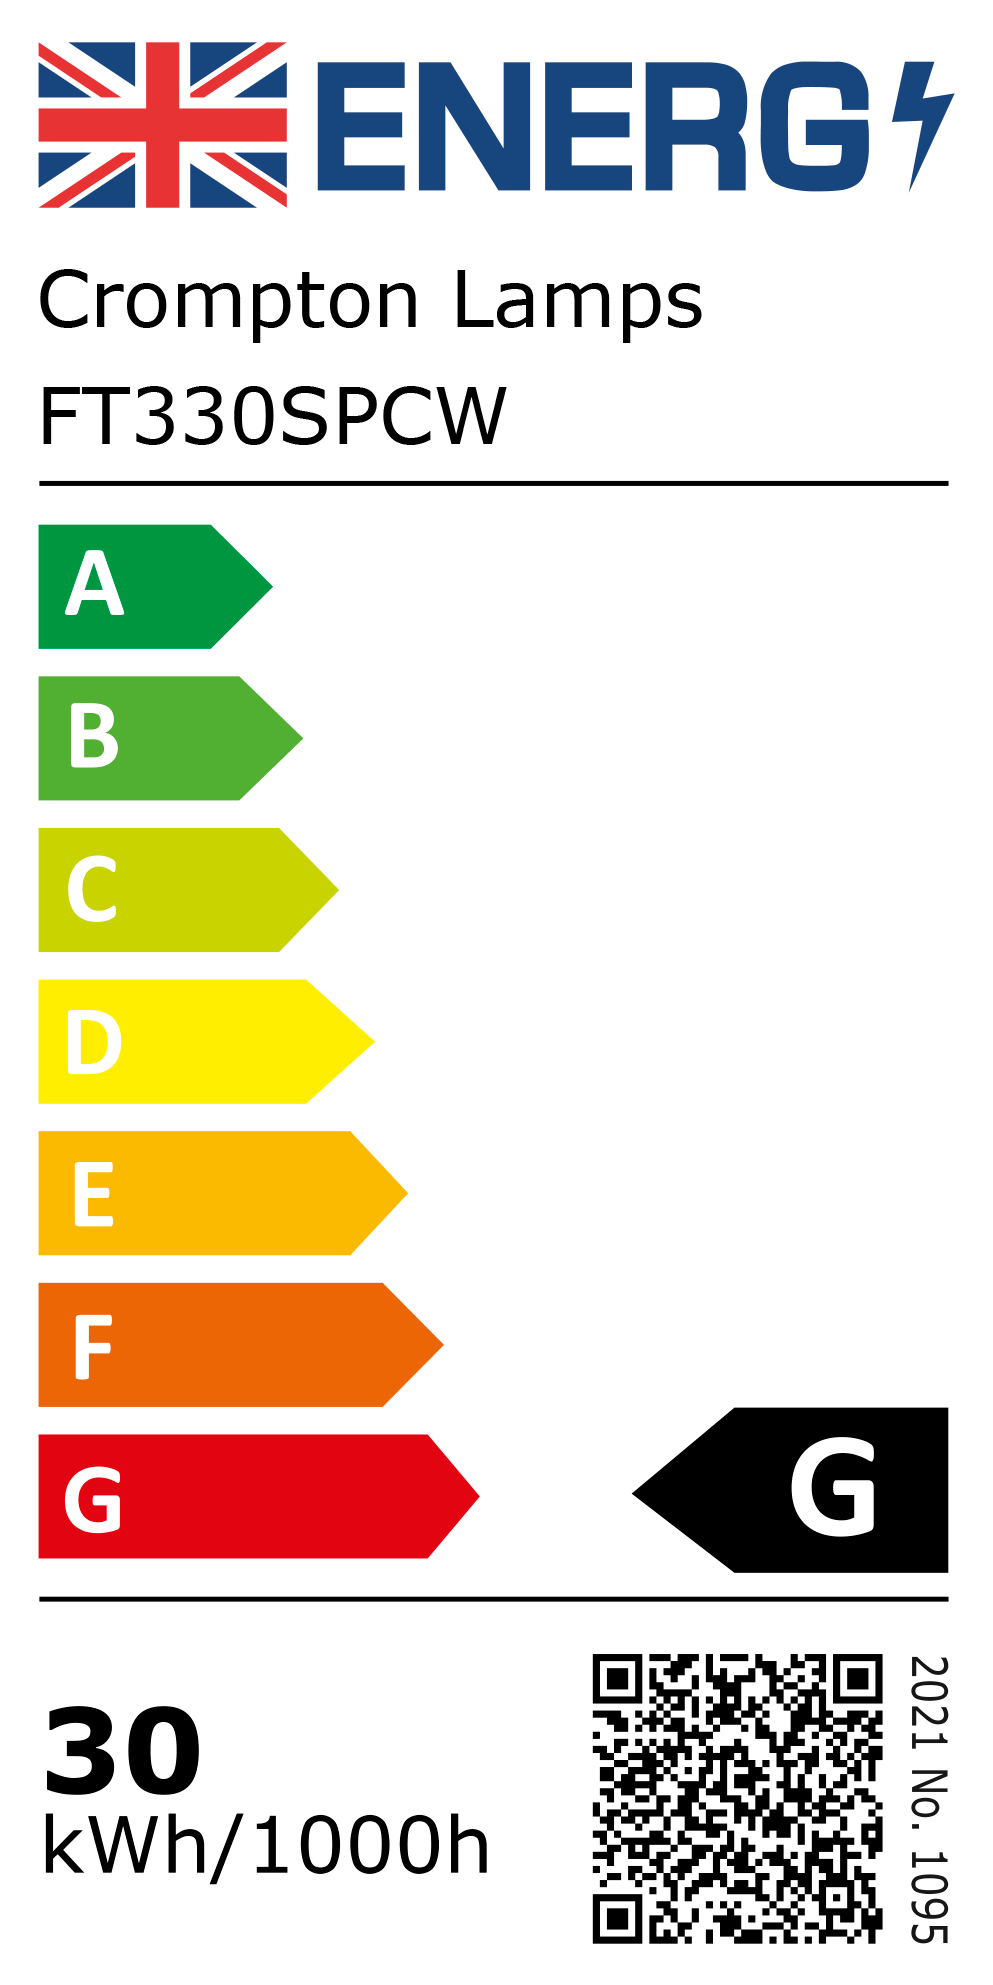 New 2021 Energy Rating Label: Stock Code FT330SPCW